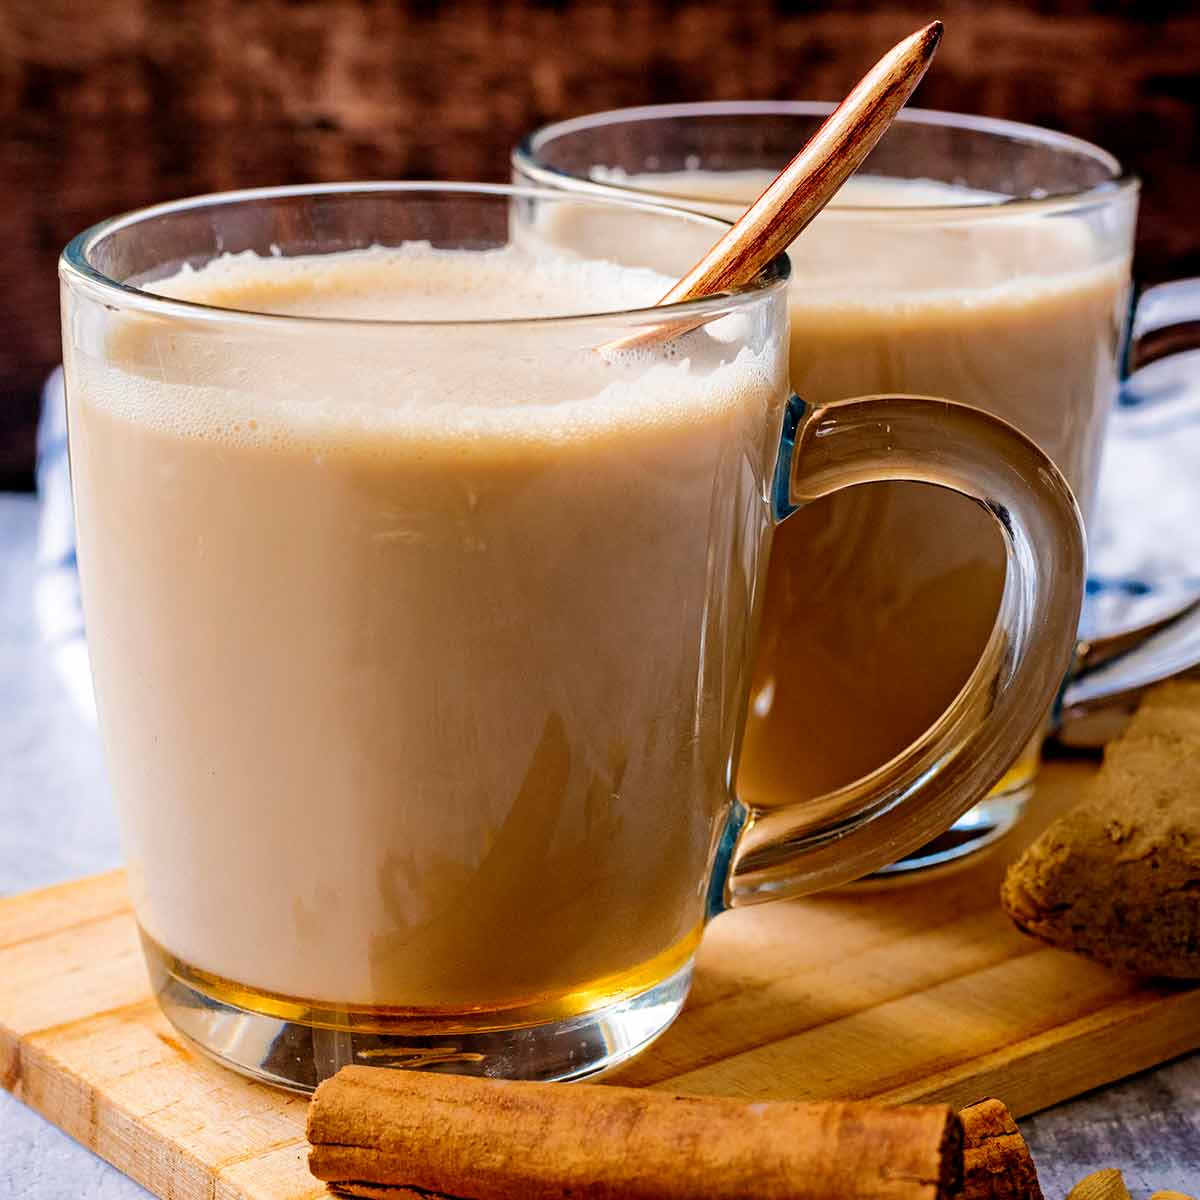 Slow Cooked Chai Tea Latte – Instant Pot Recipes